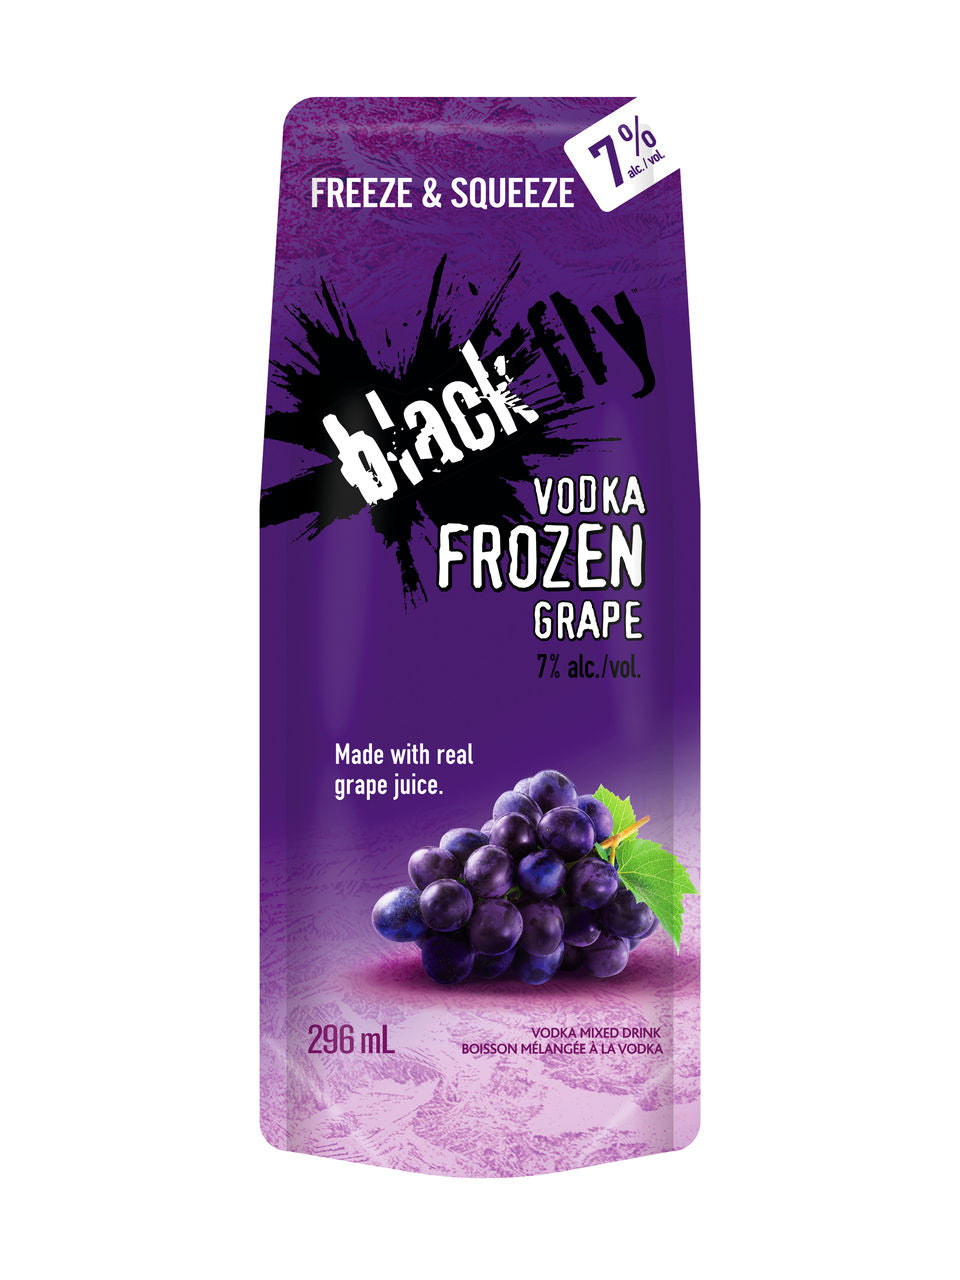 Black Fly Vodka Frozen Grape 296 ml bottle